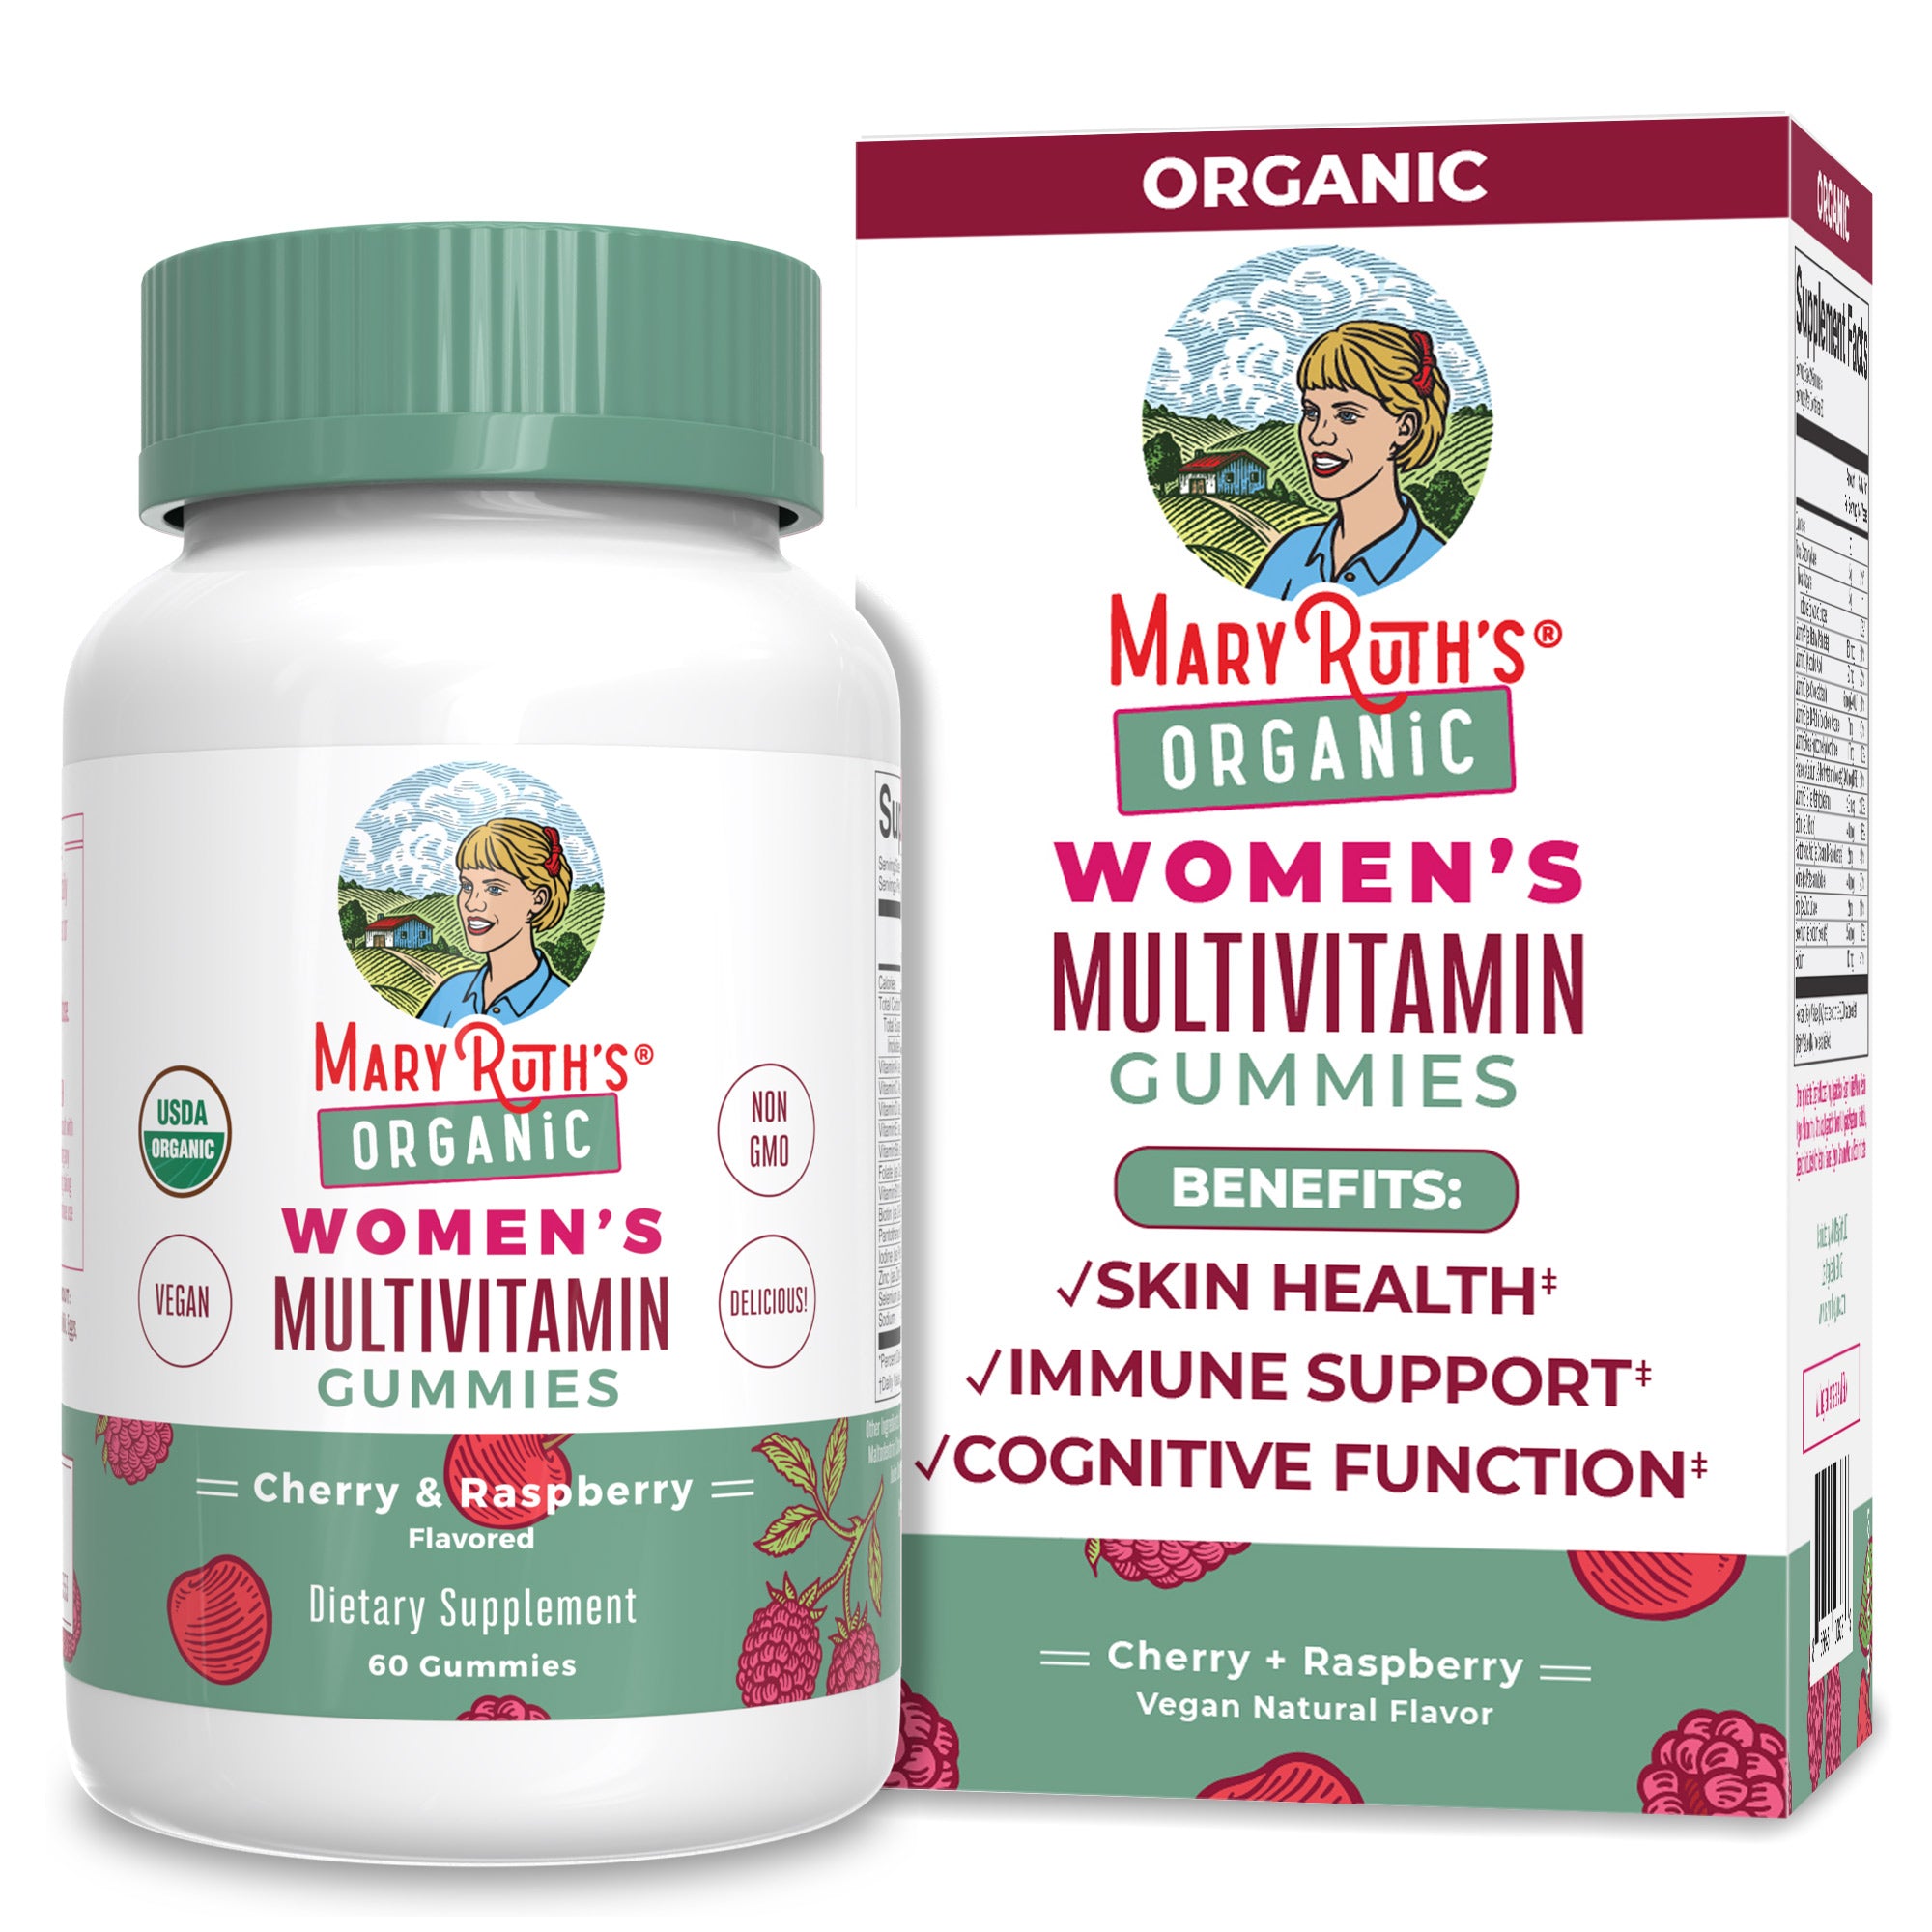 Organic Women's Multivitamin Gummies